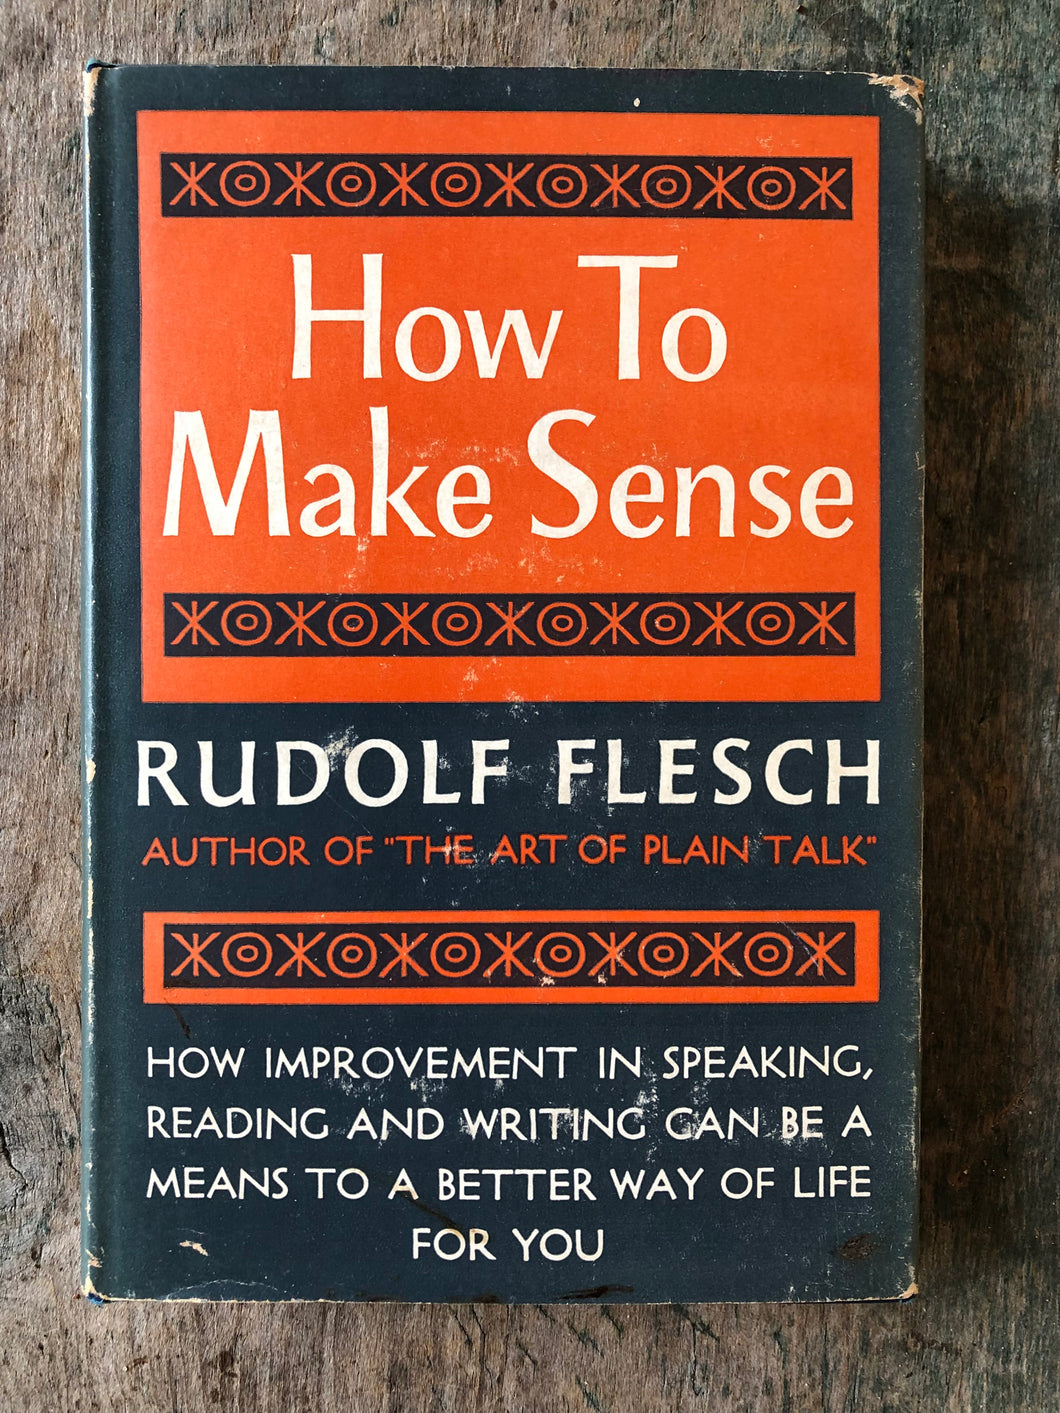 How to Make Sense by Rudolf Flesch